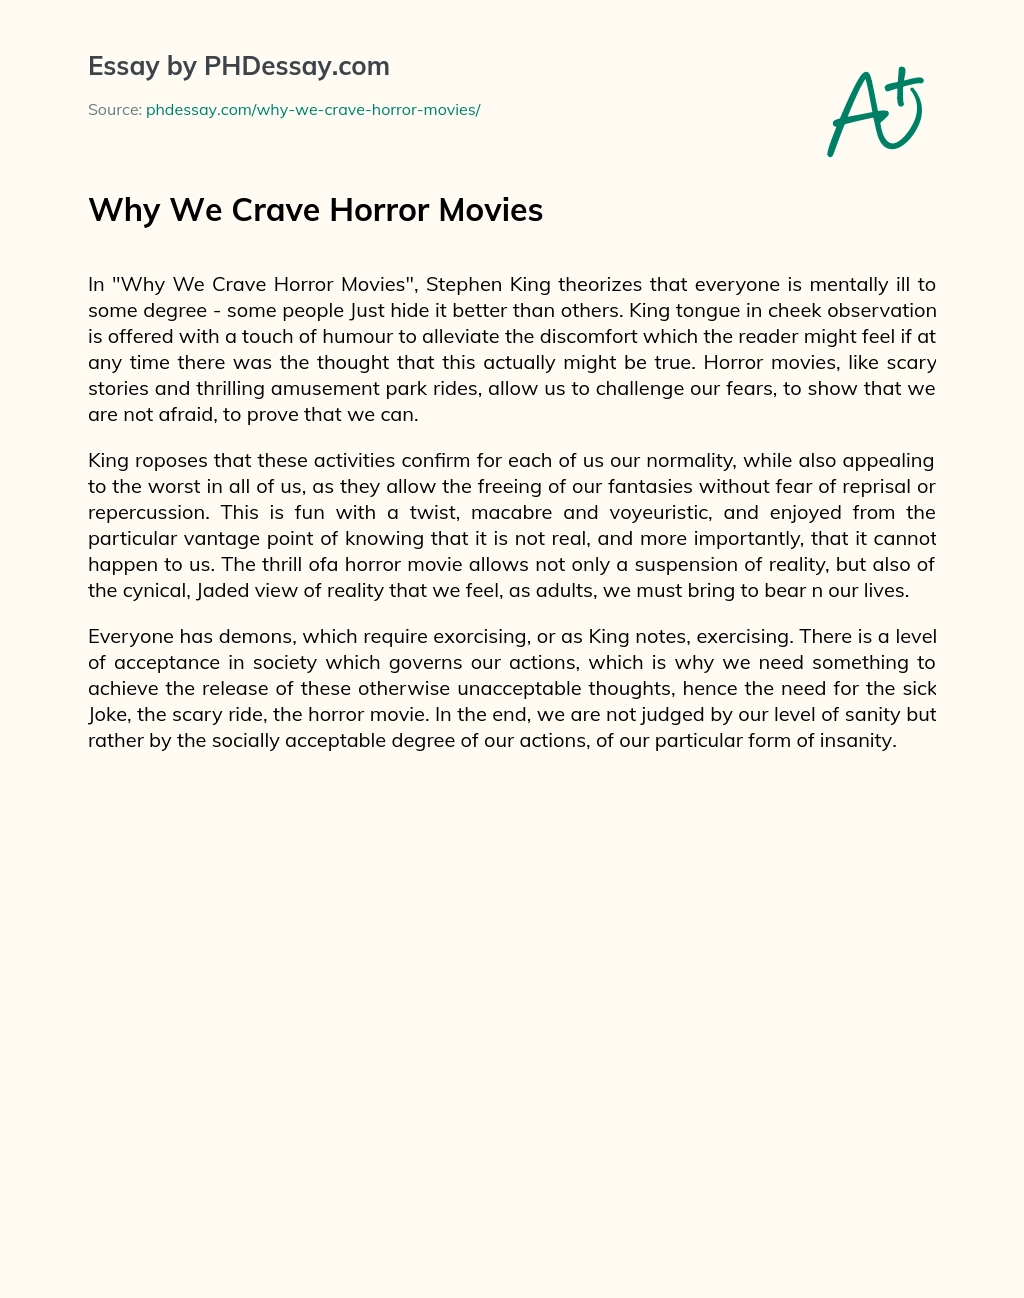 essay on horror movies